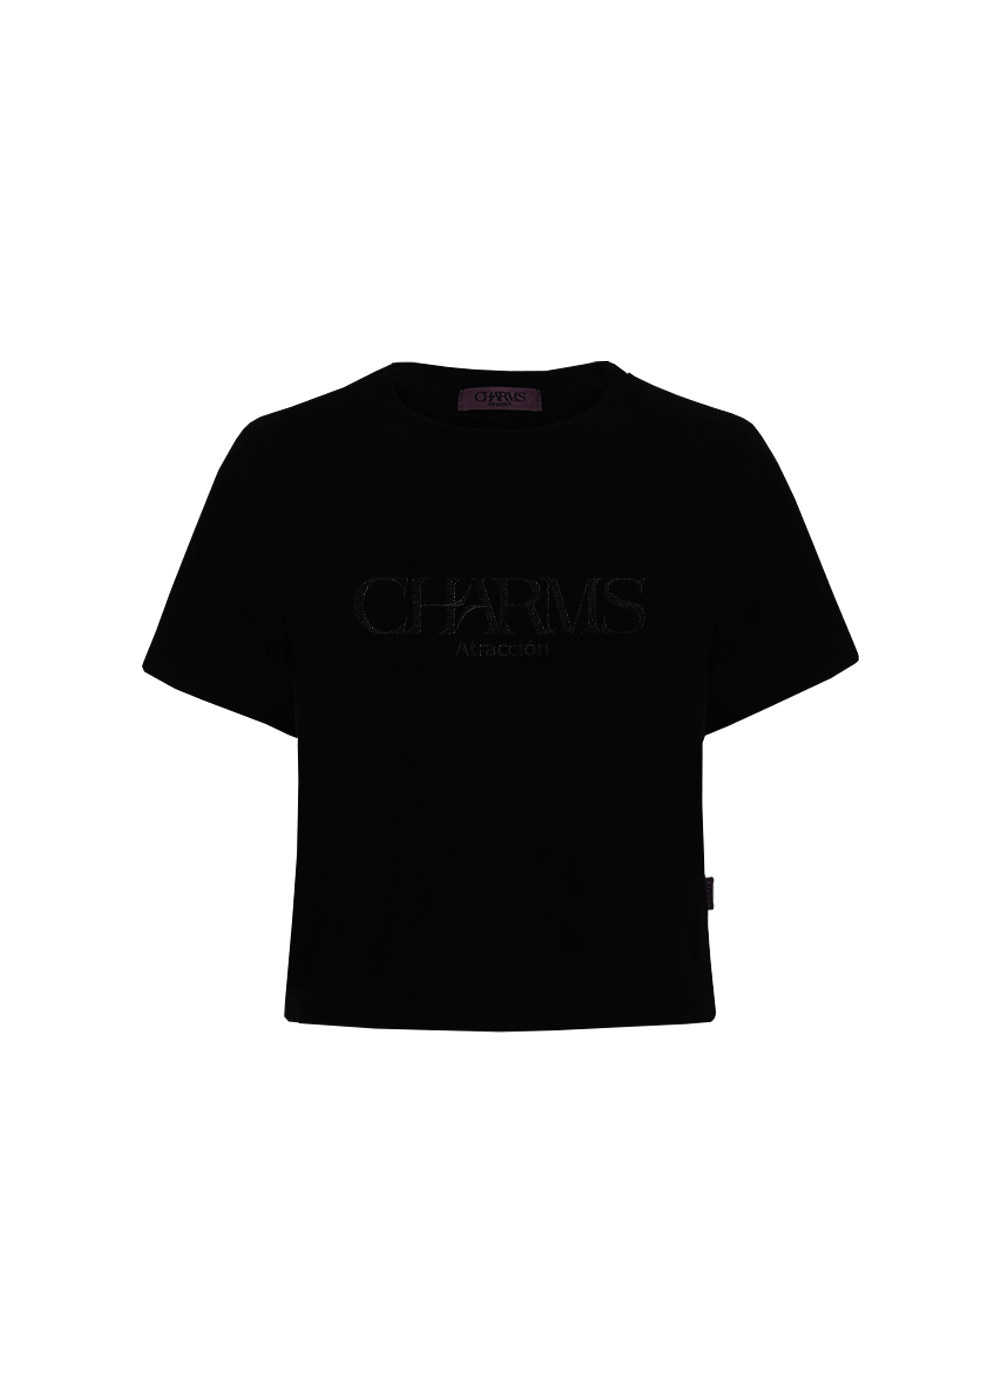 CHARMS Signature Crop T-shirt